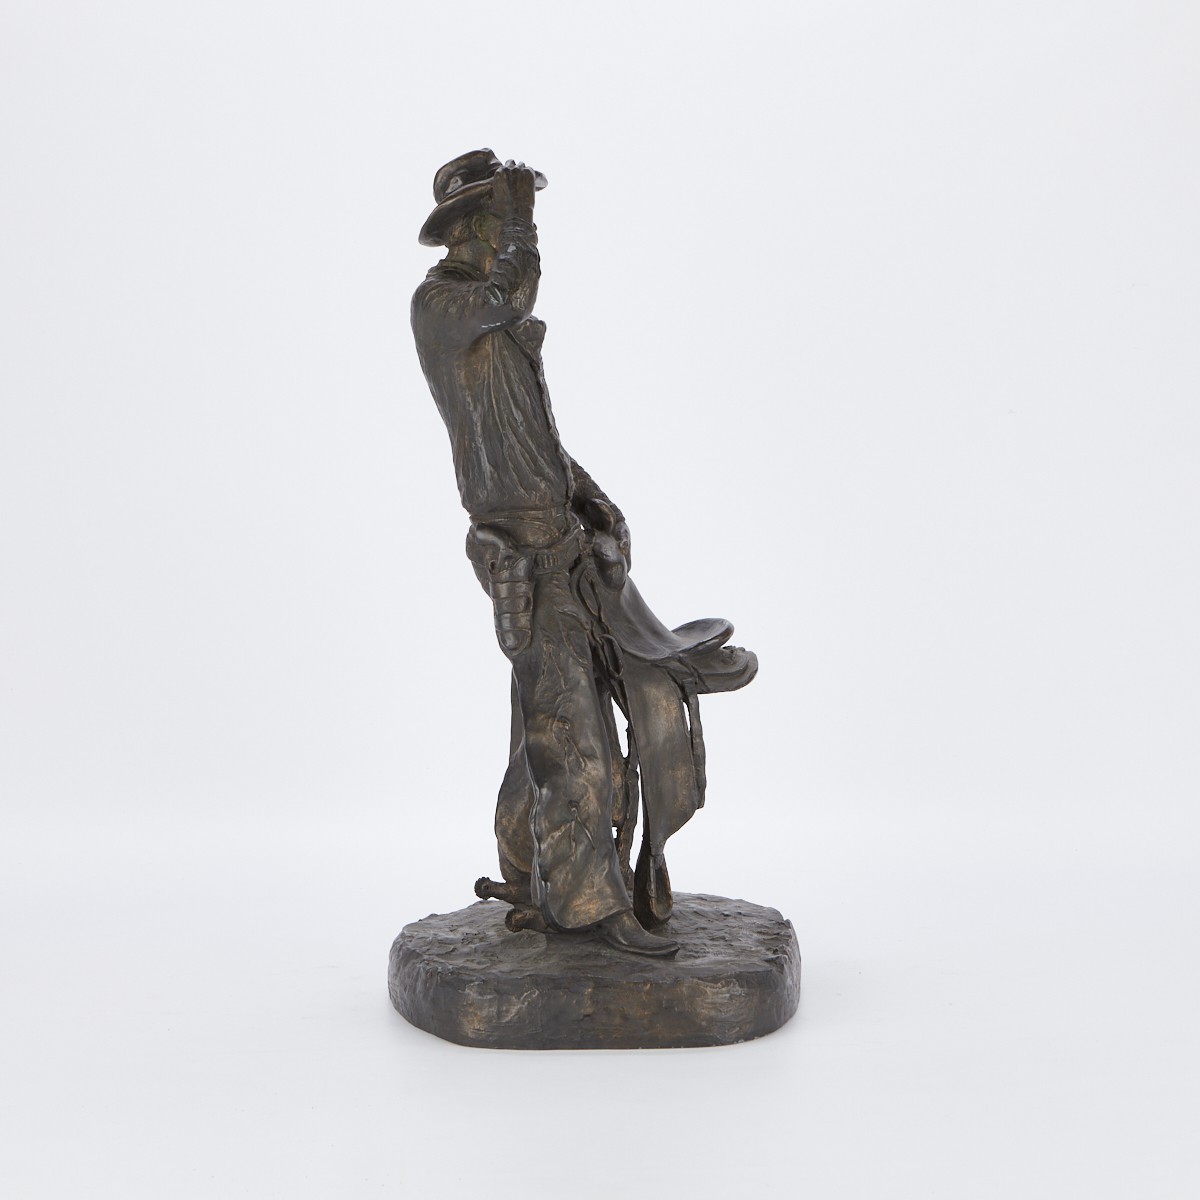 Michael Garman "Saddle Tramp" Cold Cast Bronze Sculpture - Image 5 of 6